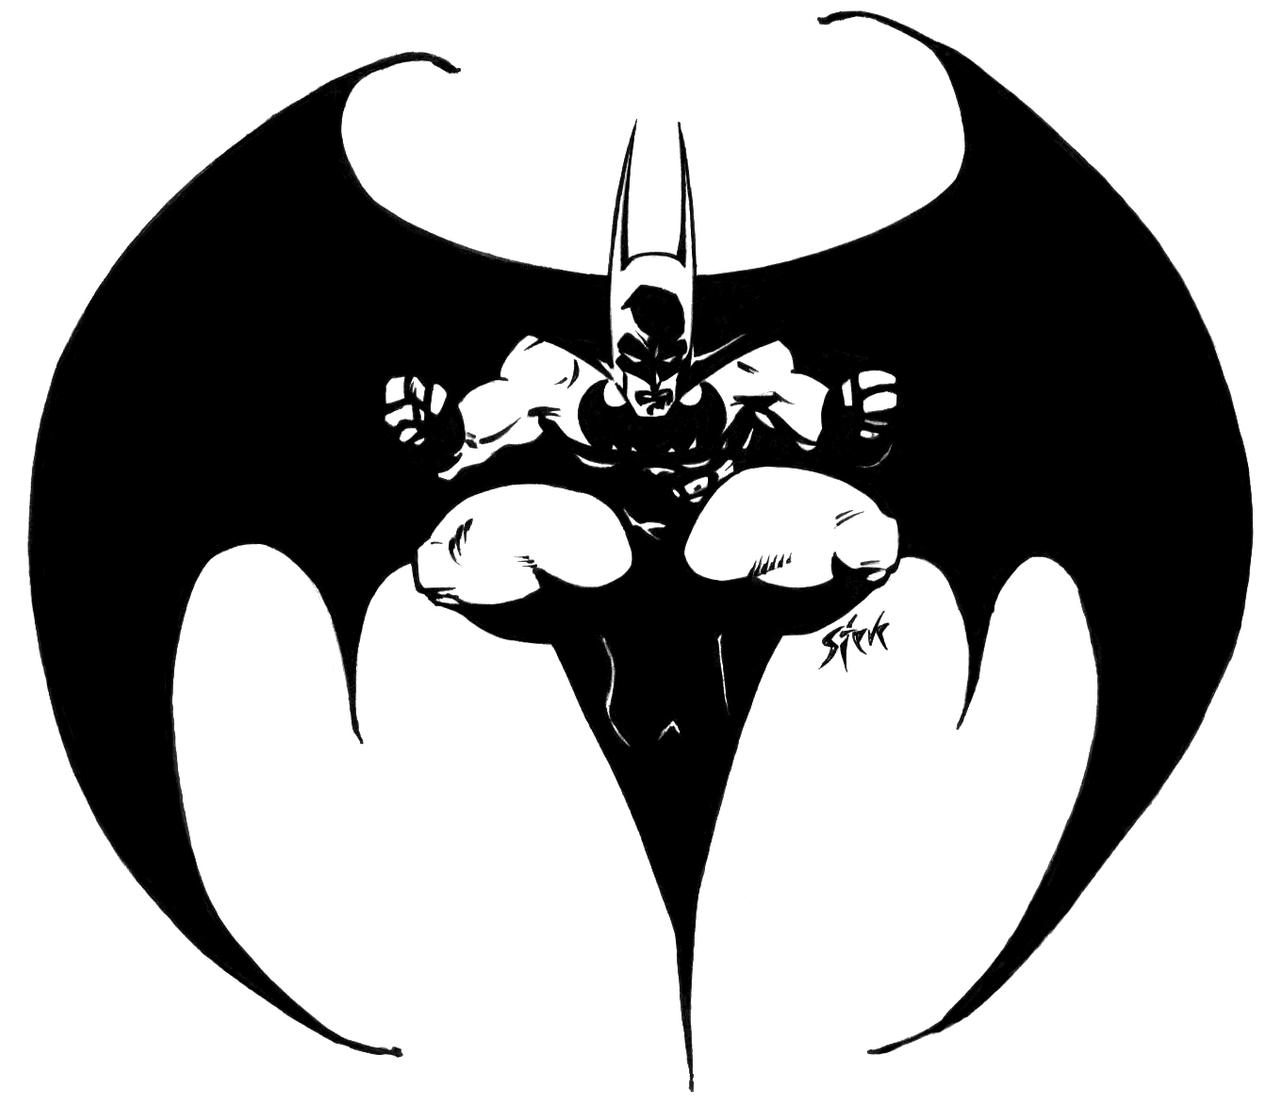 Batman Tattoo Design by lordkai on DeviantArt